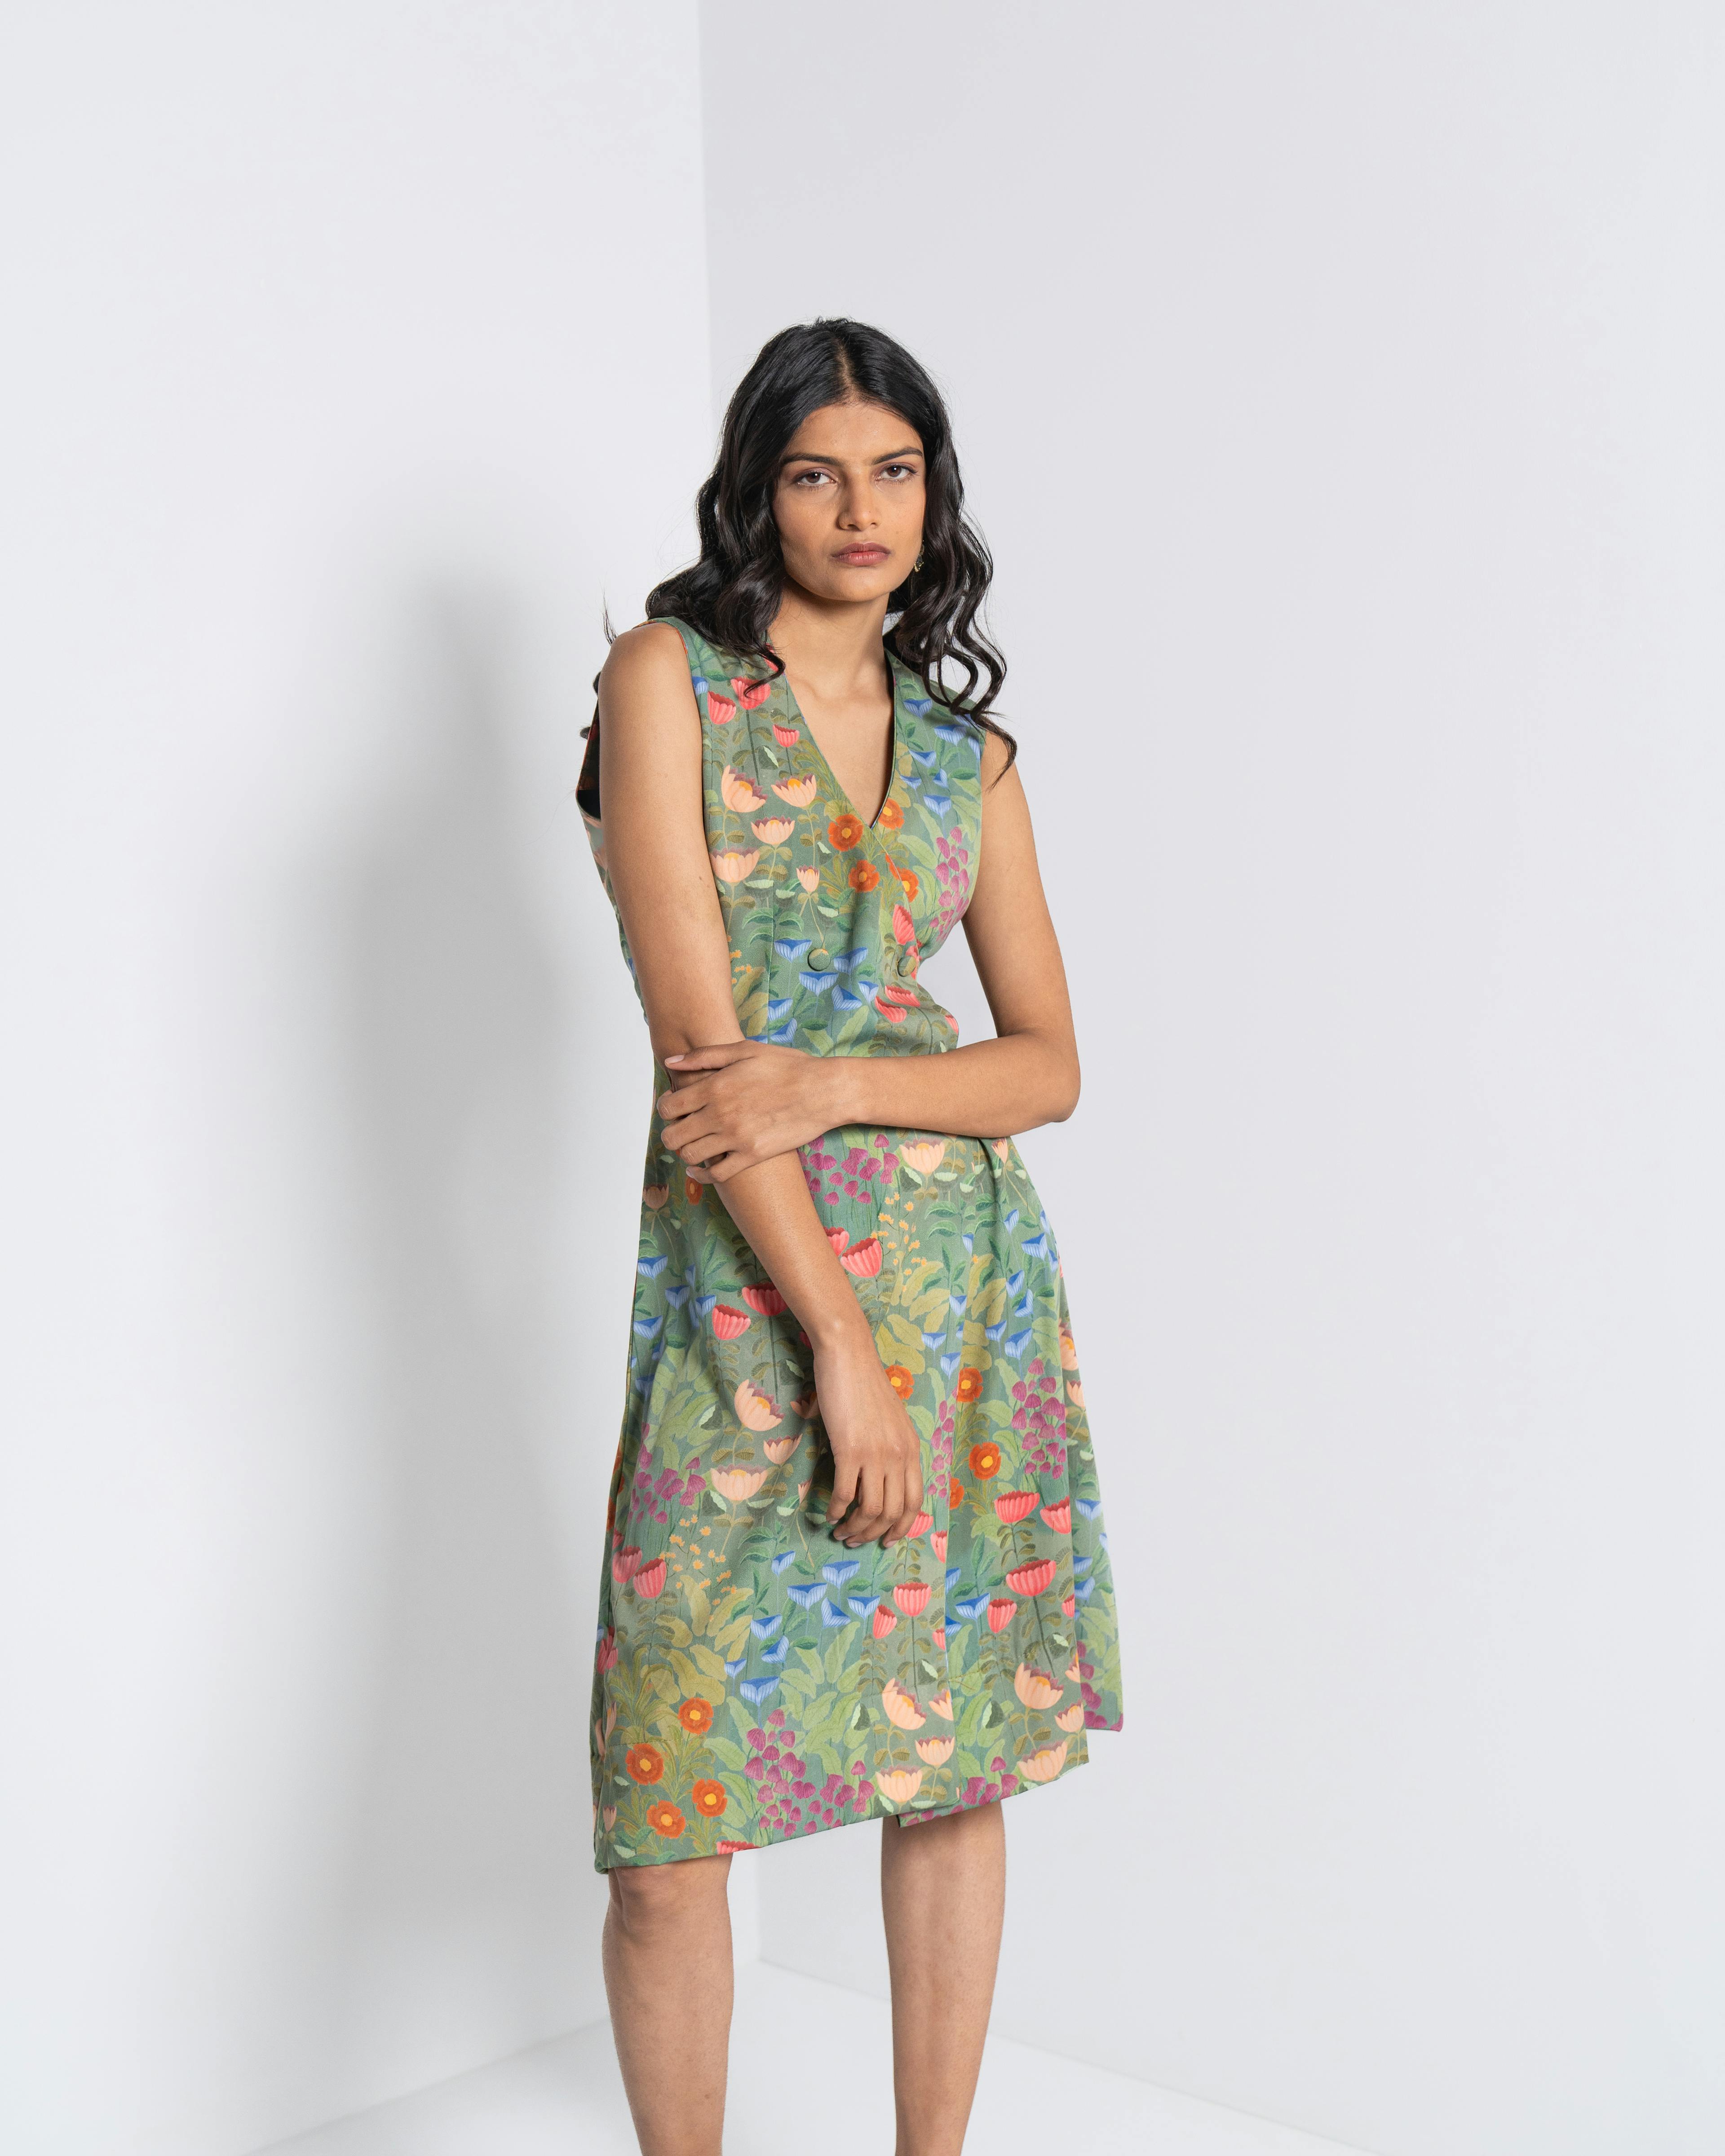 Bloom Coat Dress, a product by Concept Kapda